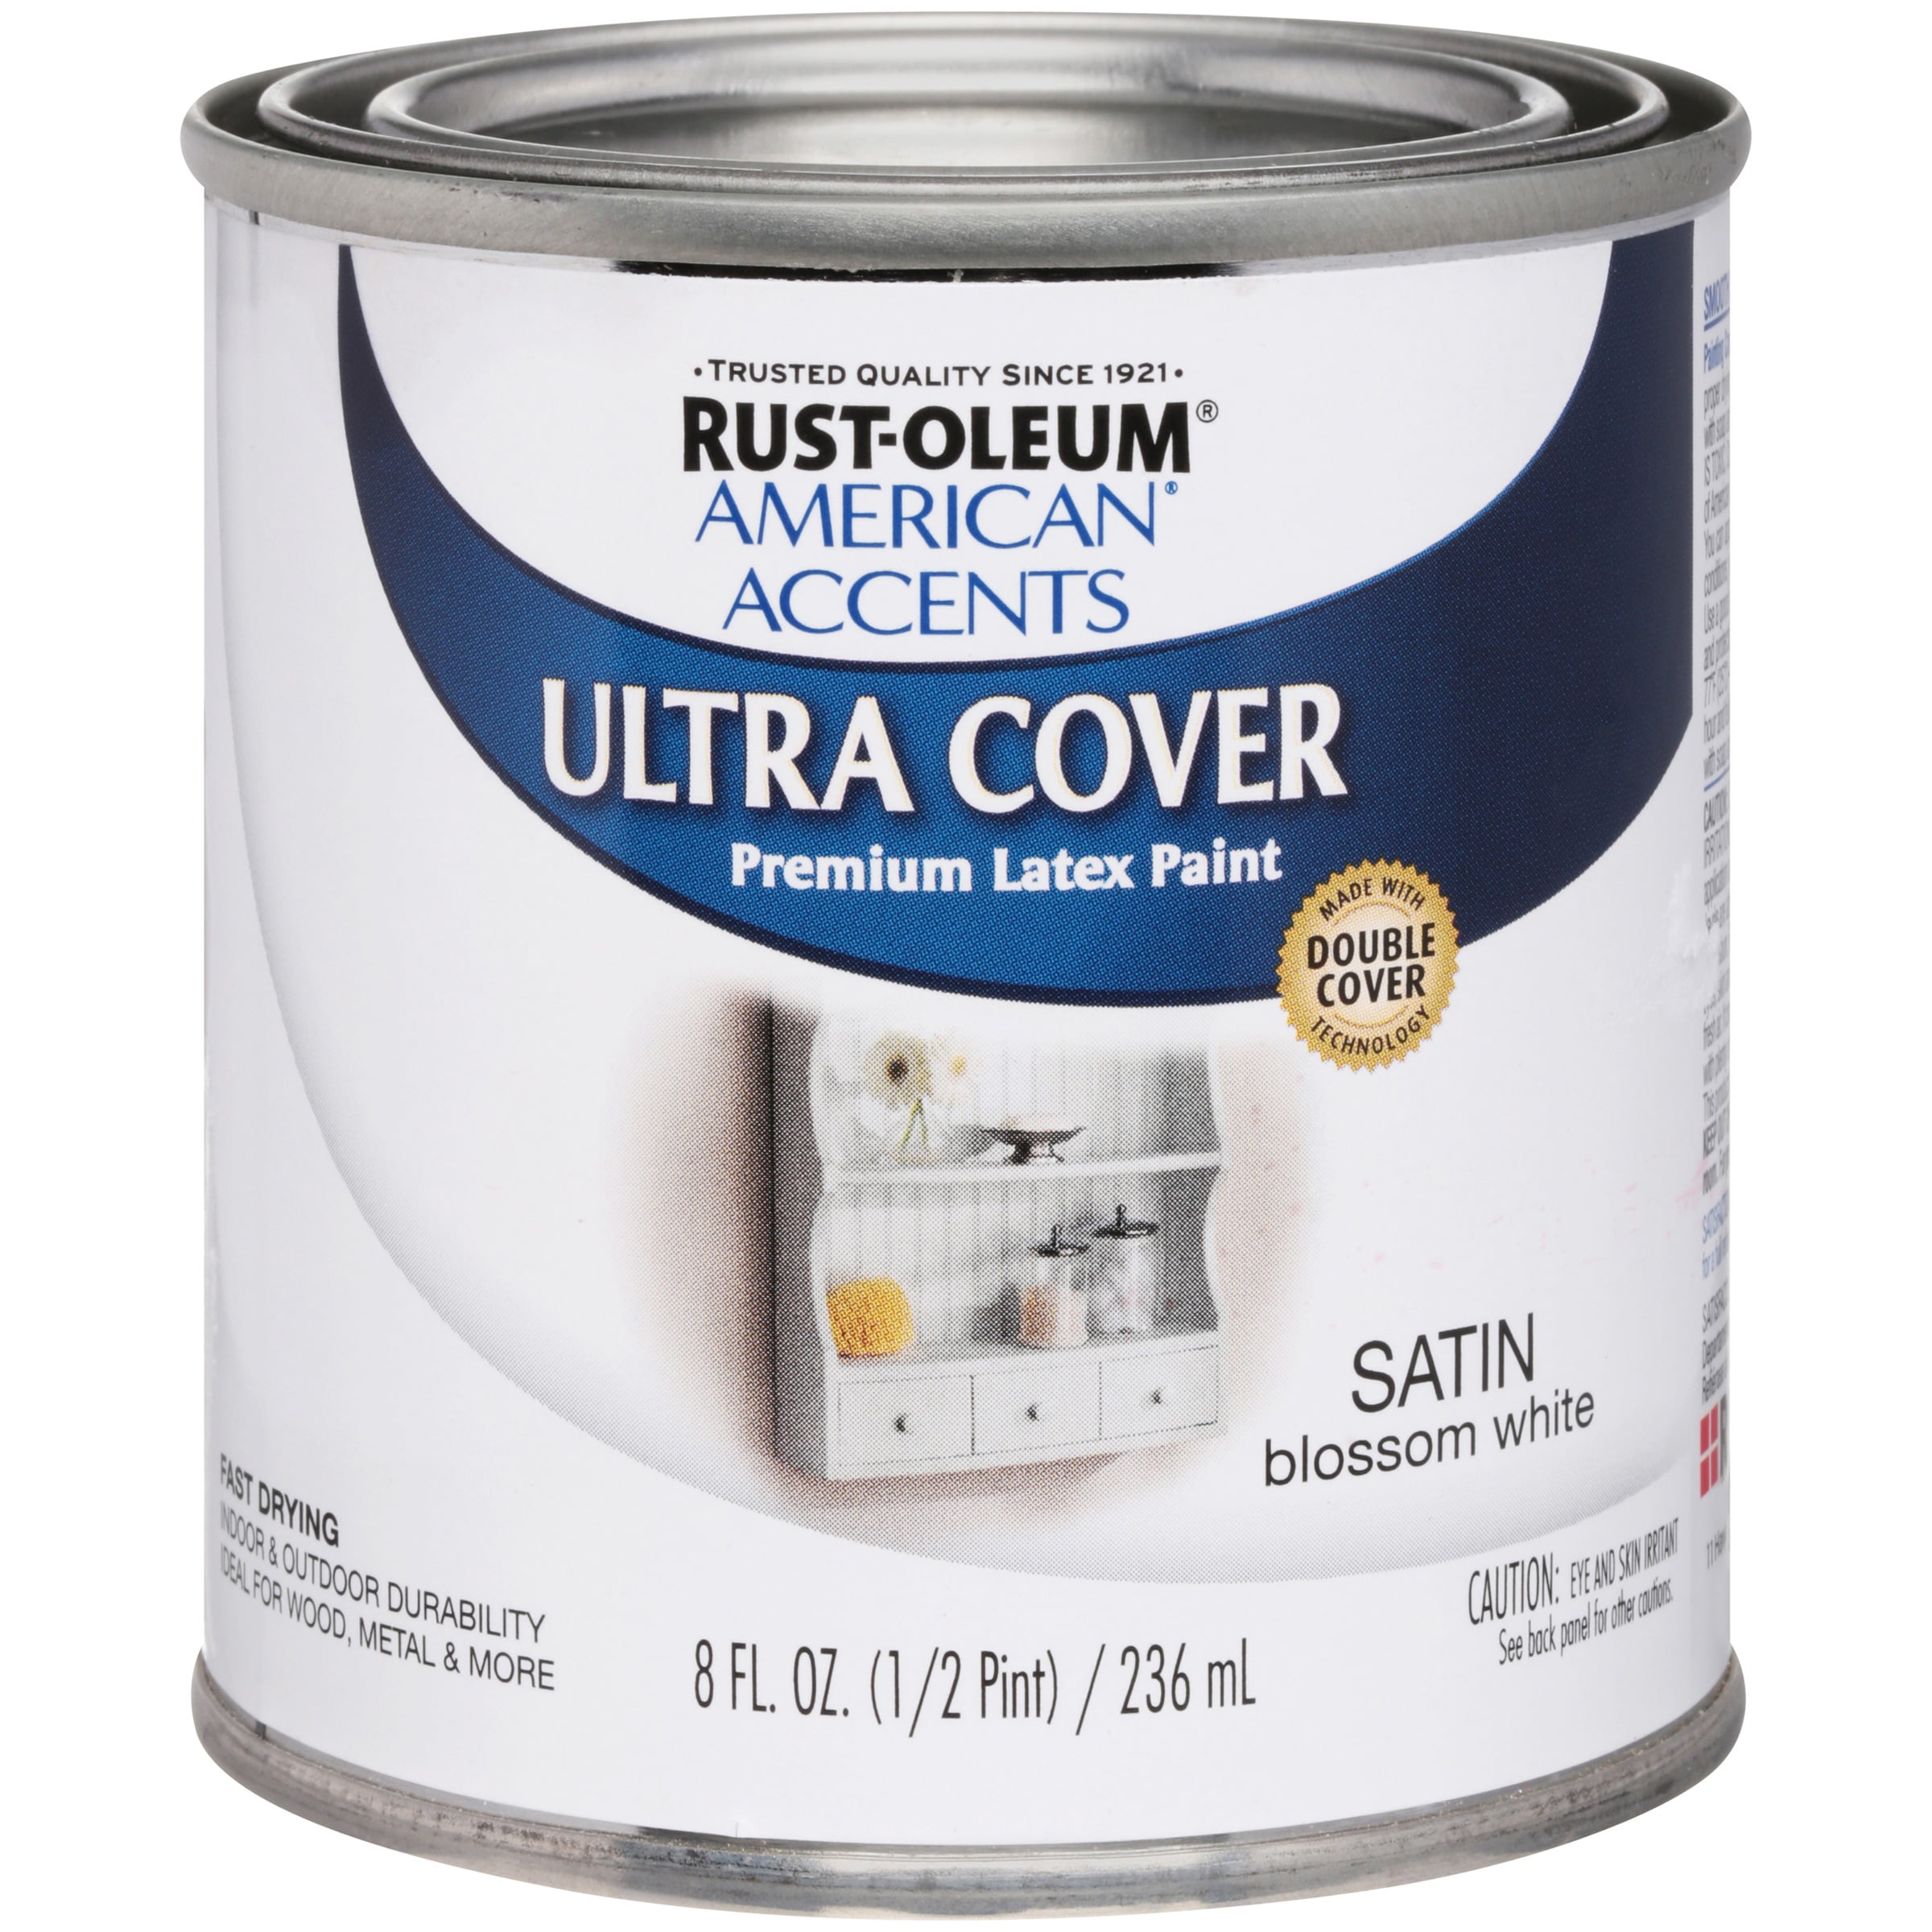 RustOleum American Accents Ultra Cover Satin Blossom White Premium Latex Paint, 8 fl oz